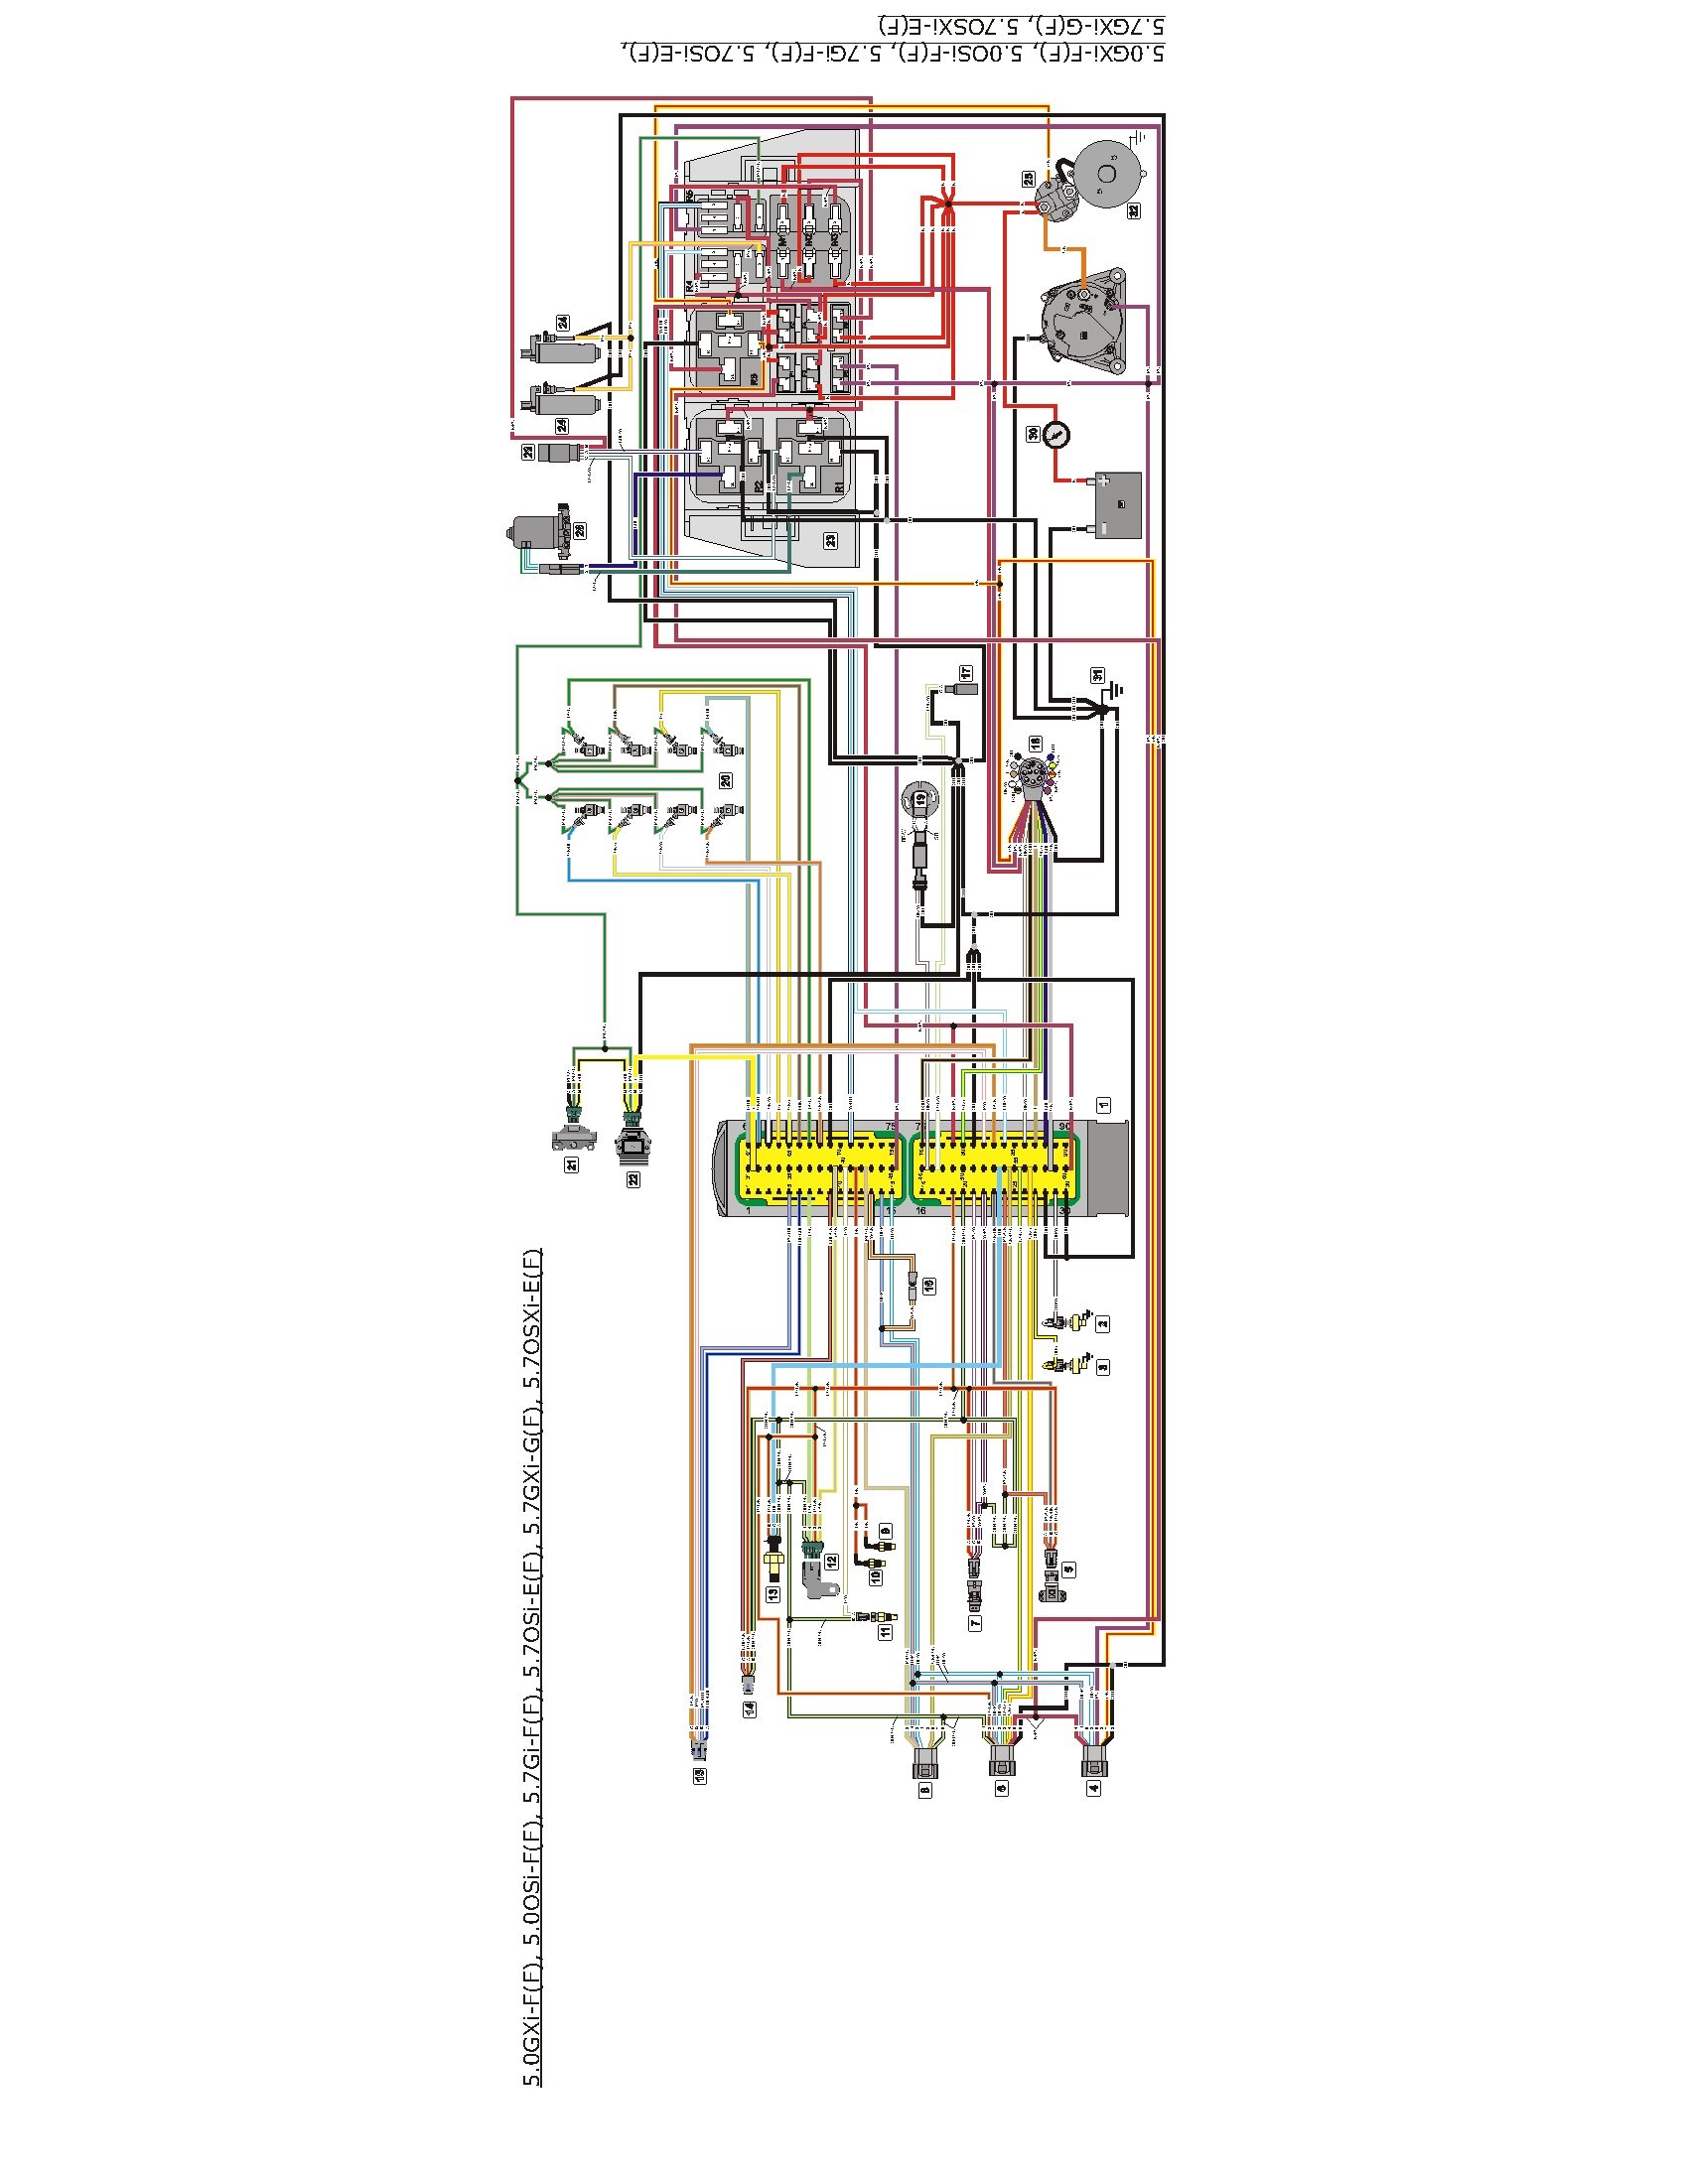 volvo penta trim gauge wiring diagram